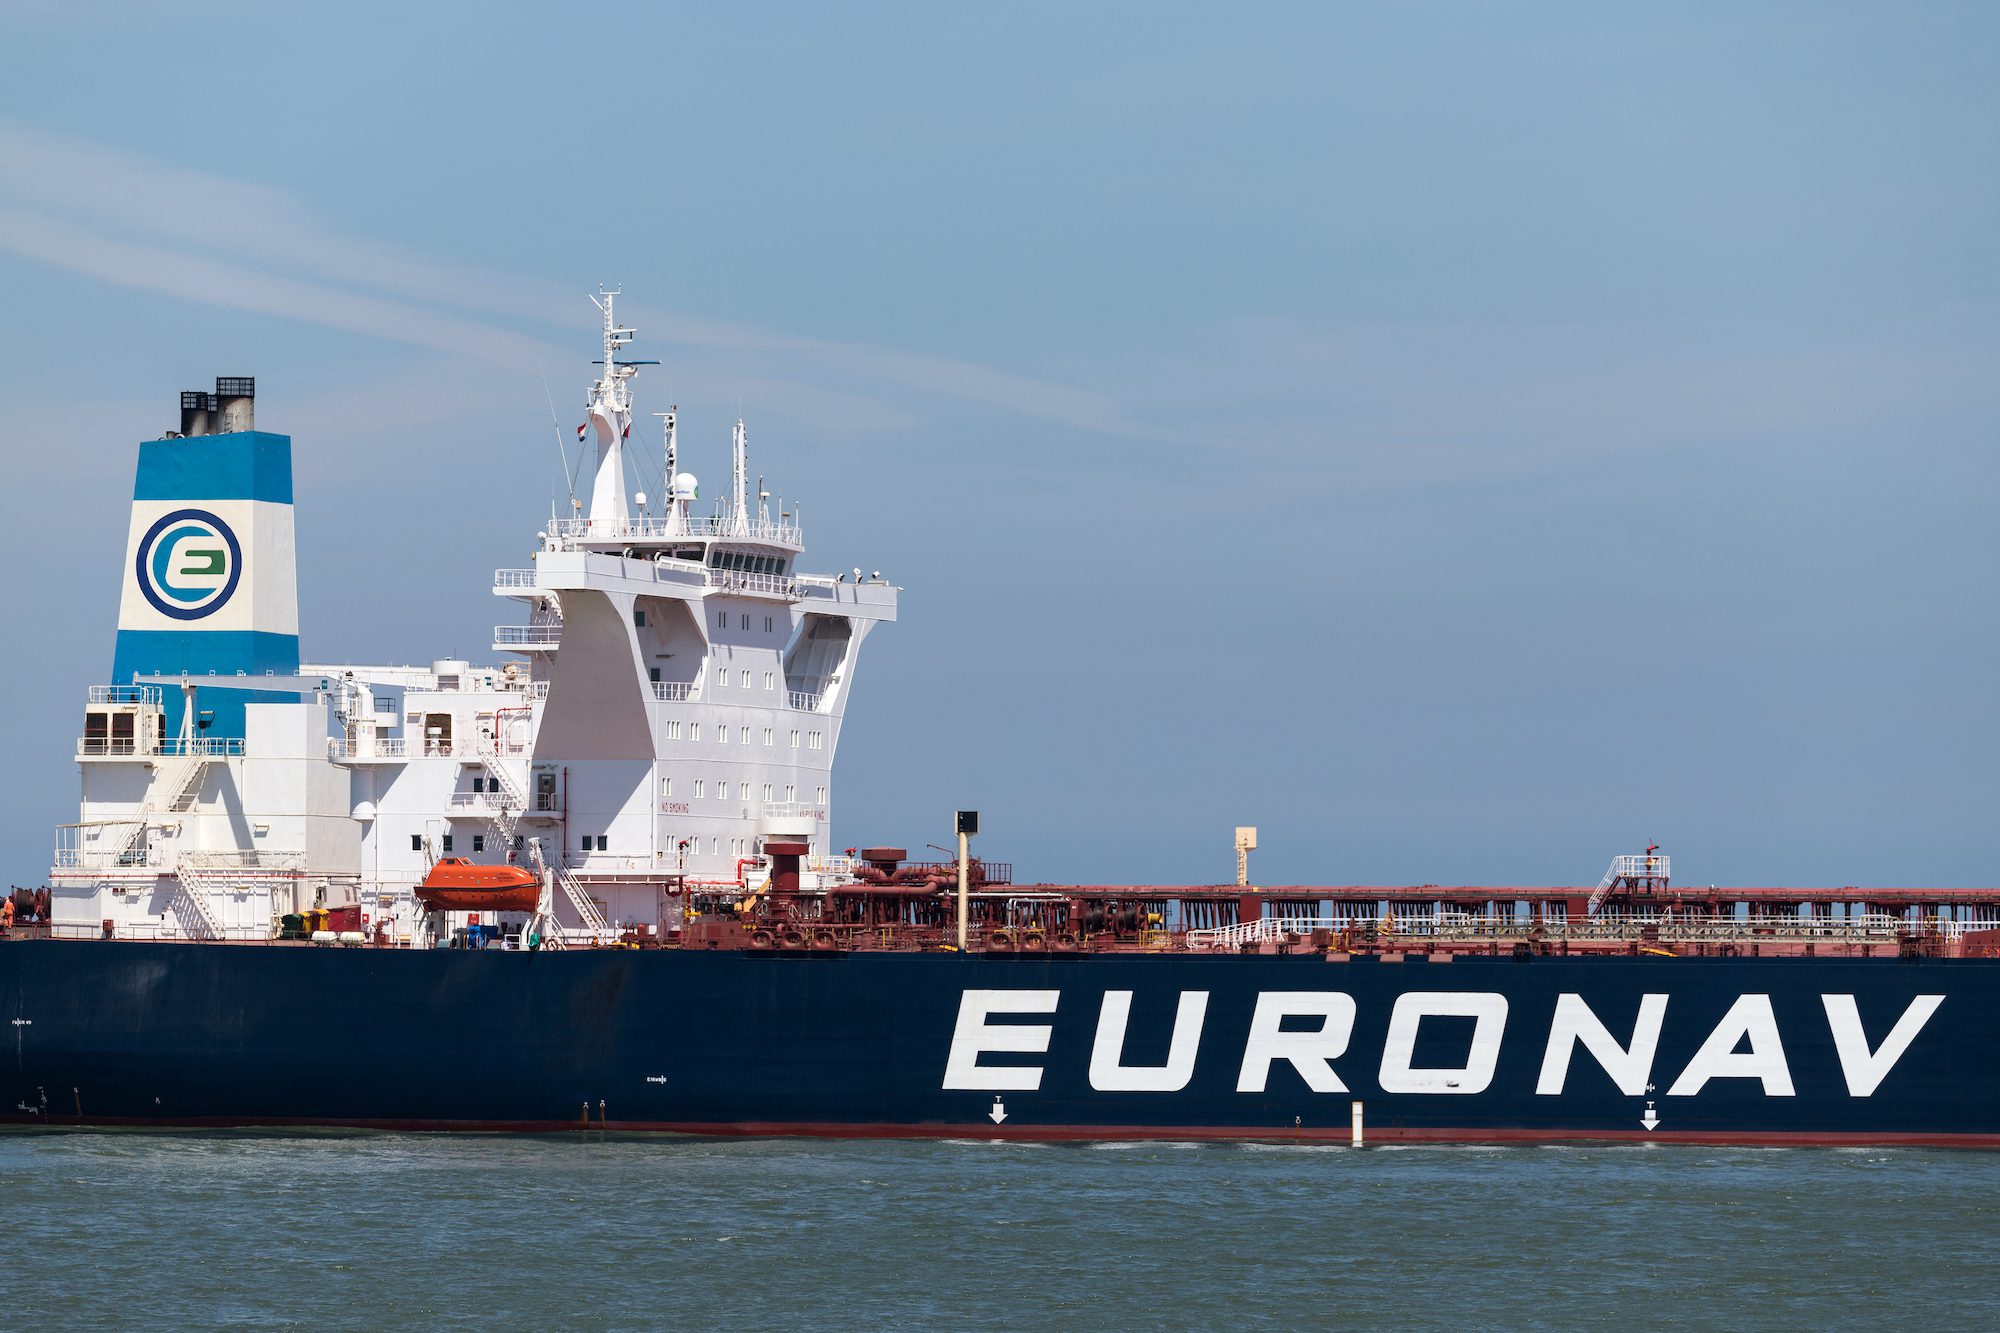 Euronav’s Net Loss Deepens as Omicron Hits Crude Tanker Recovery